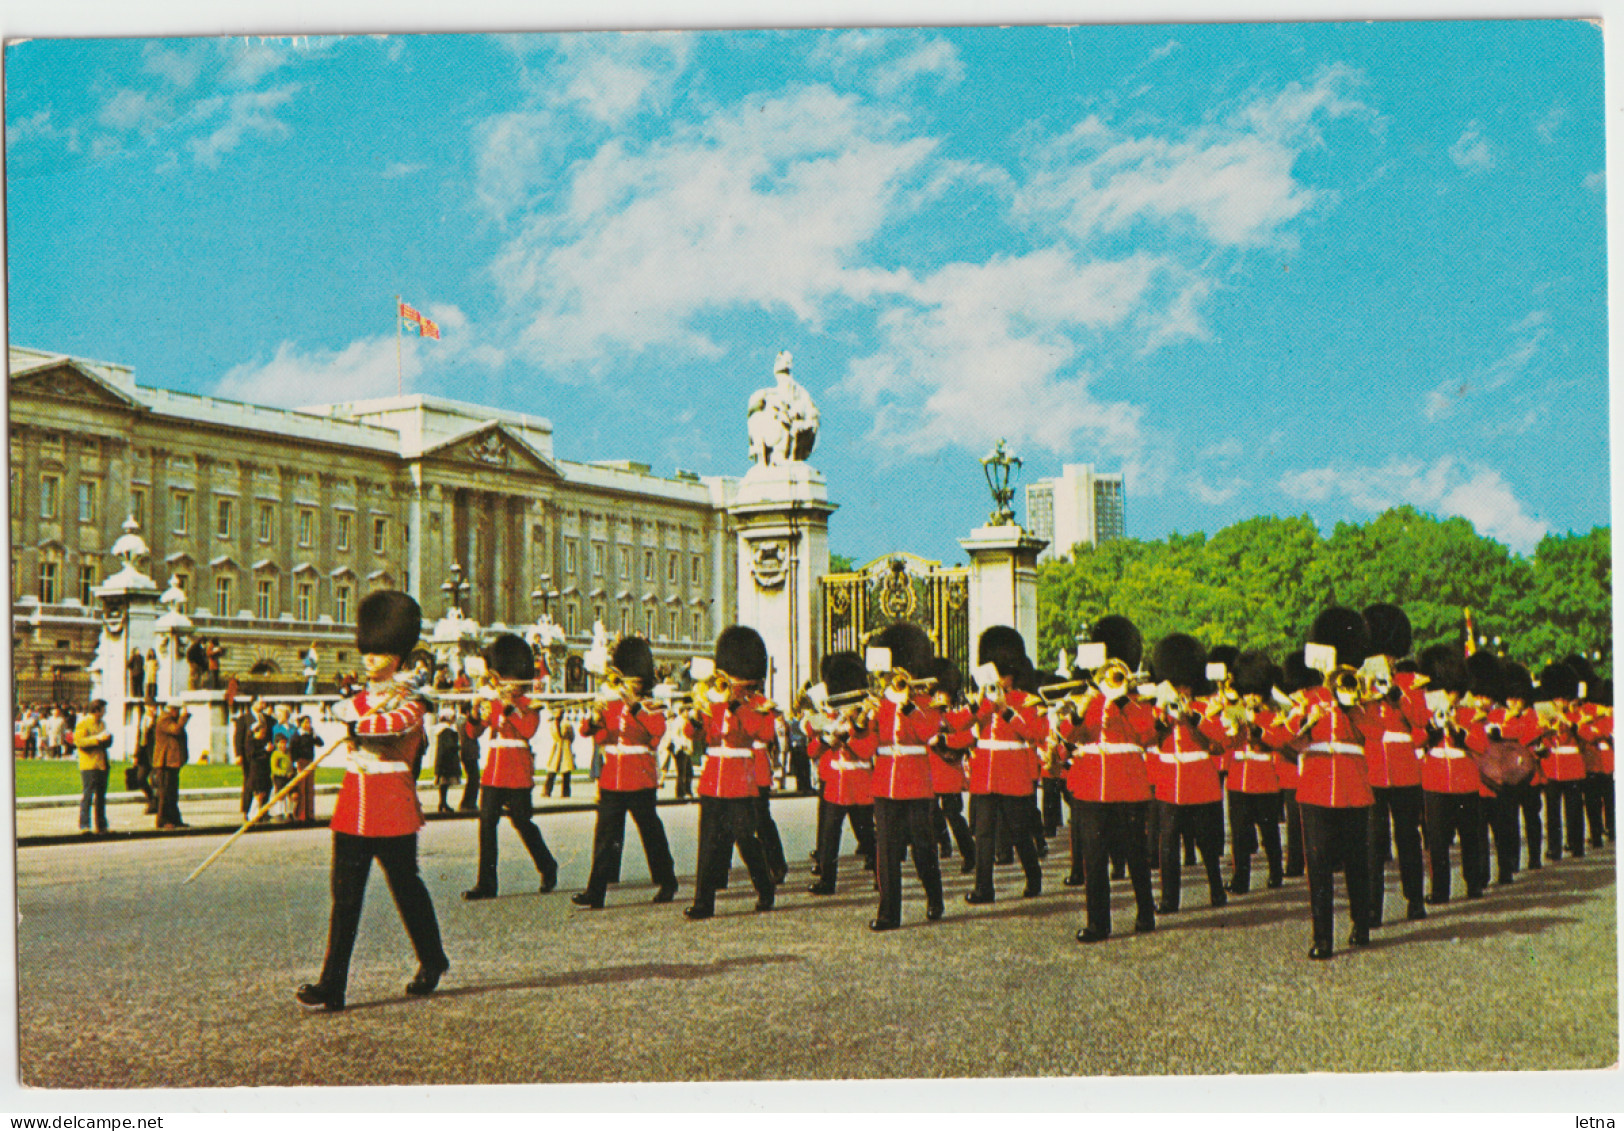 GB UK ENGLAND GREAT BRITAIN Guards Band Buckingham Palace LONDON No.413 Postcard C1960s-70s - Buckingham Palace